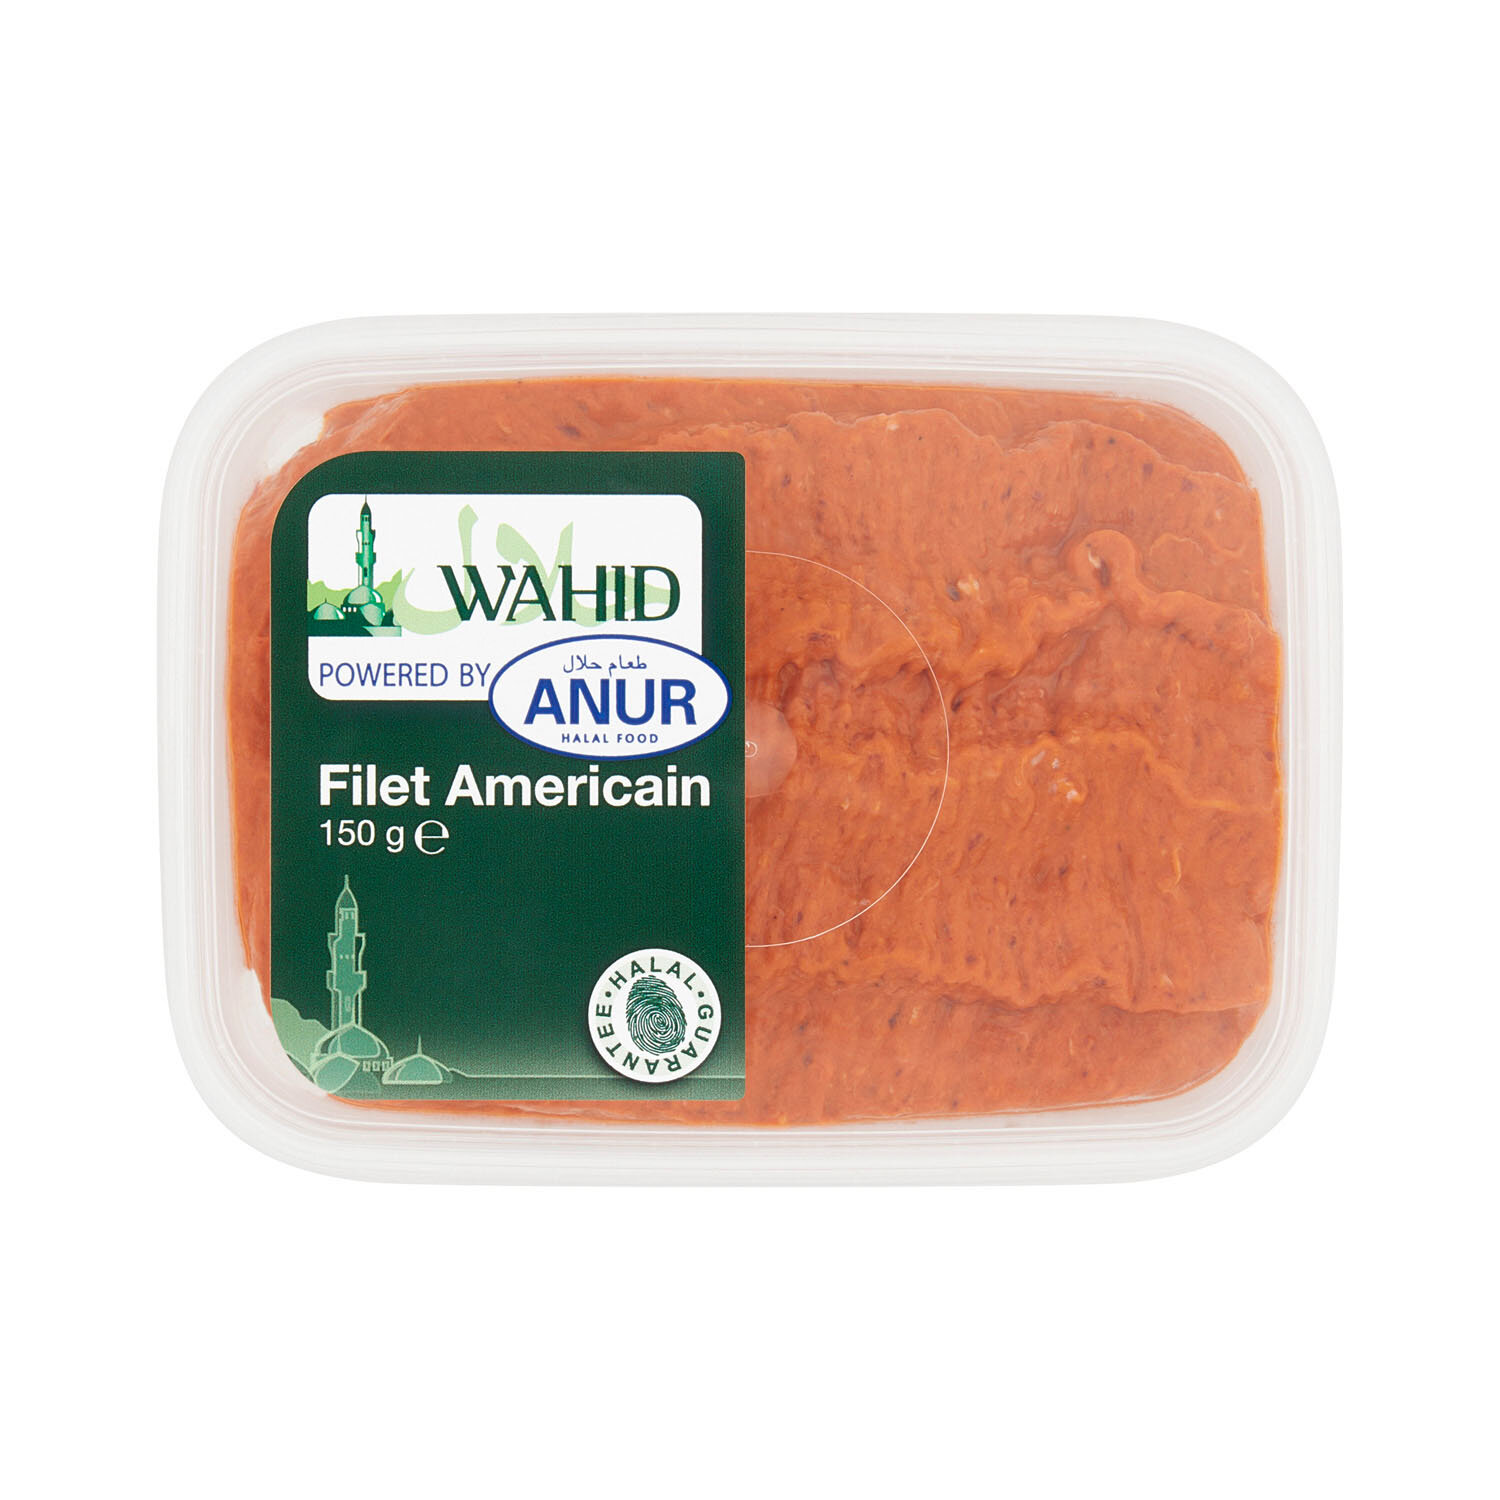 Filet americain - Wahid (Copy) (Copy)